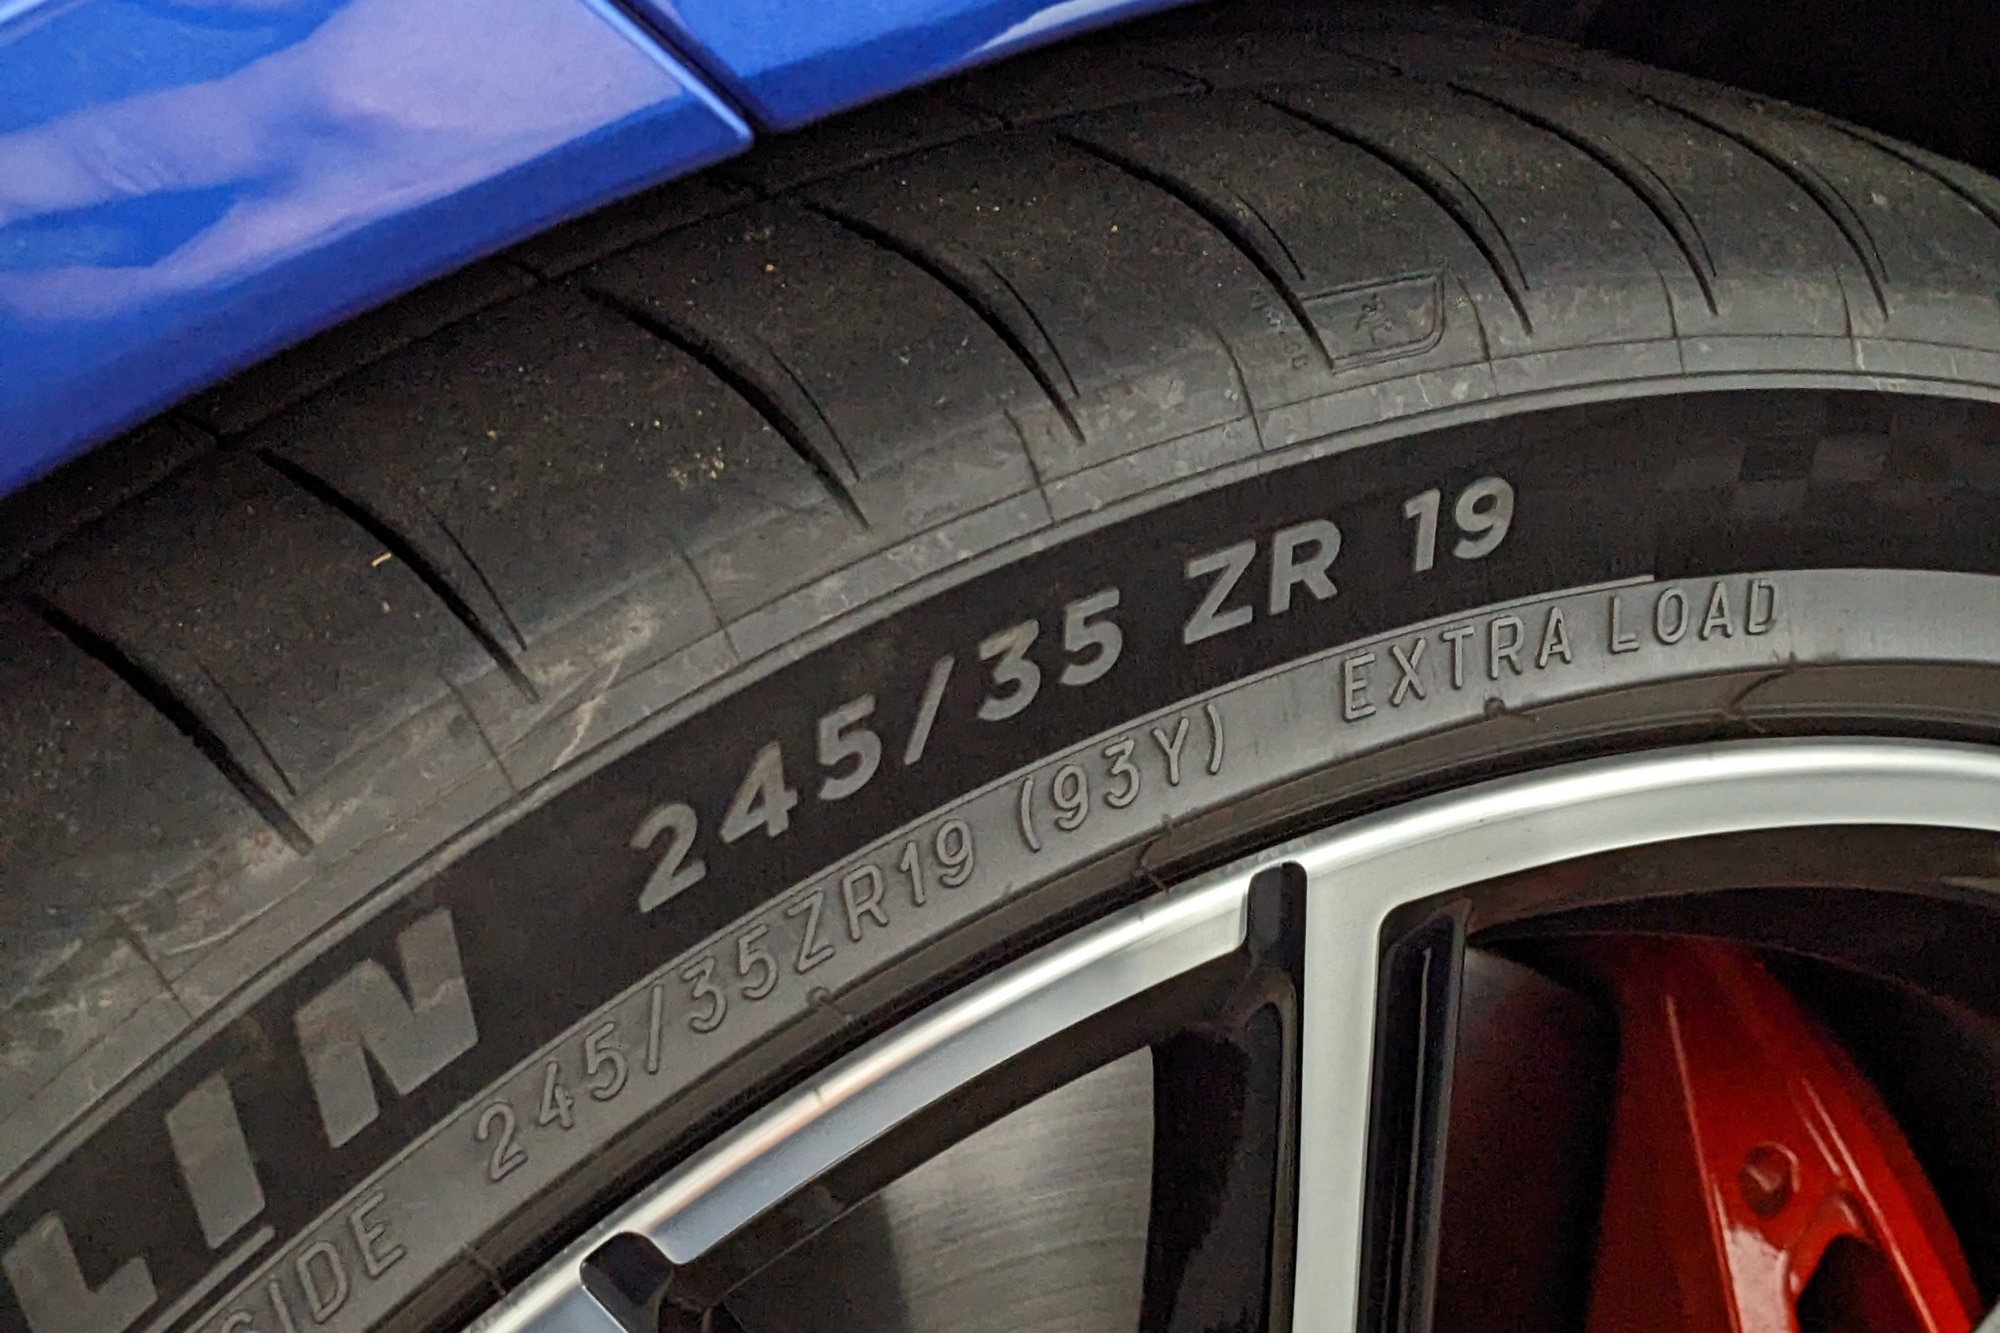 Michelin 245/35 ZR 19 tires